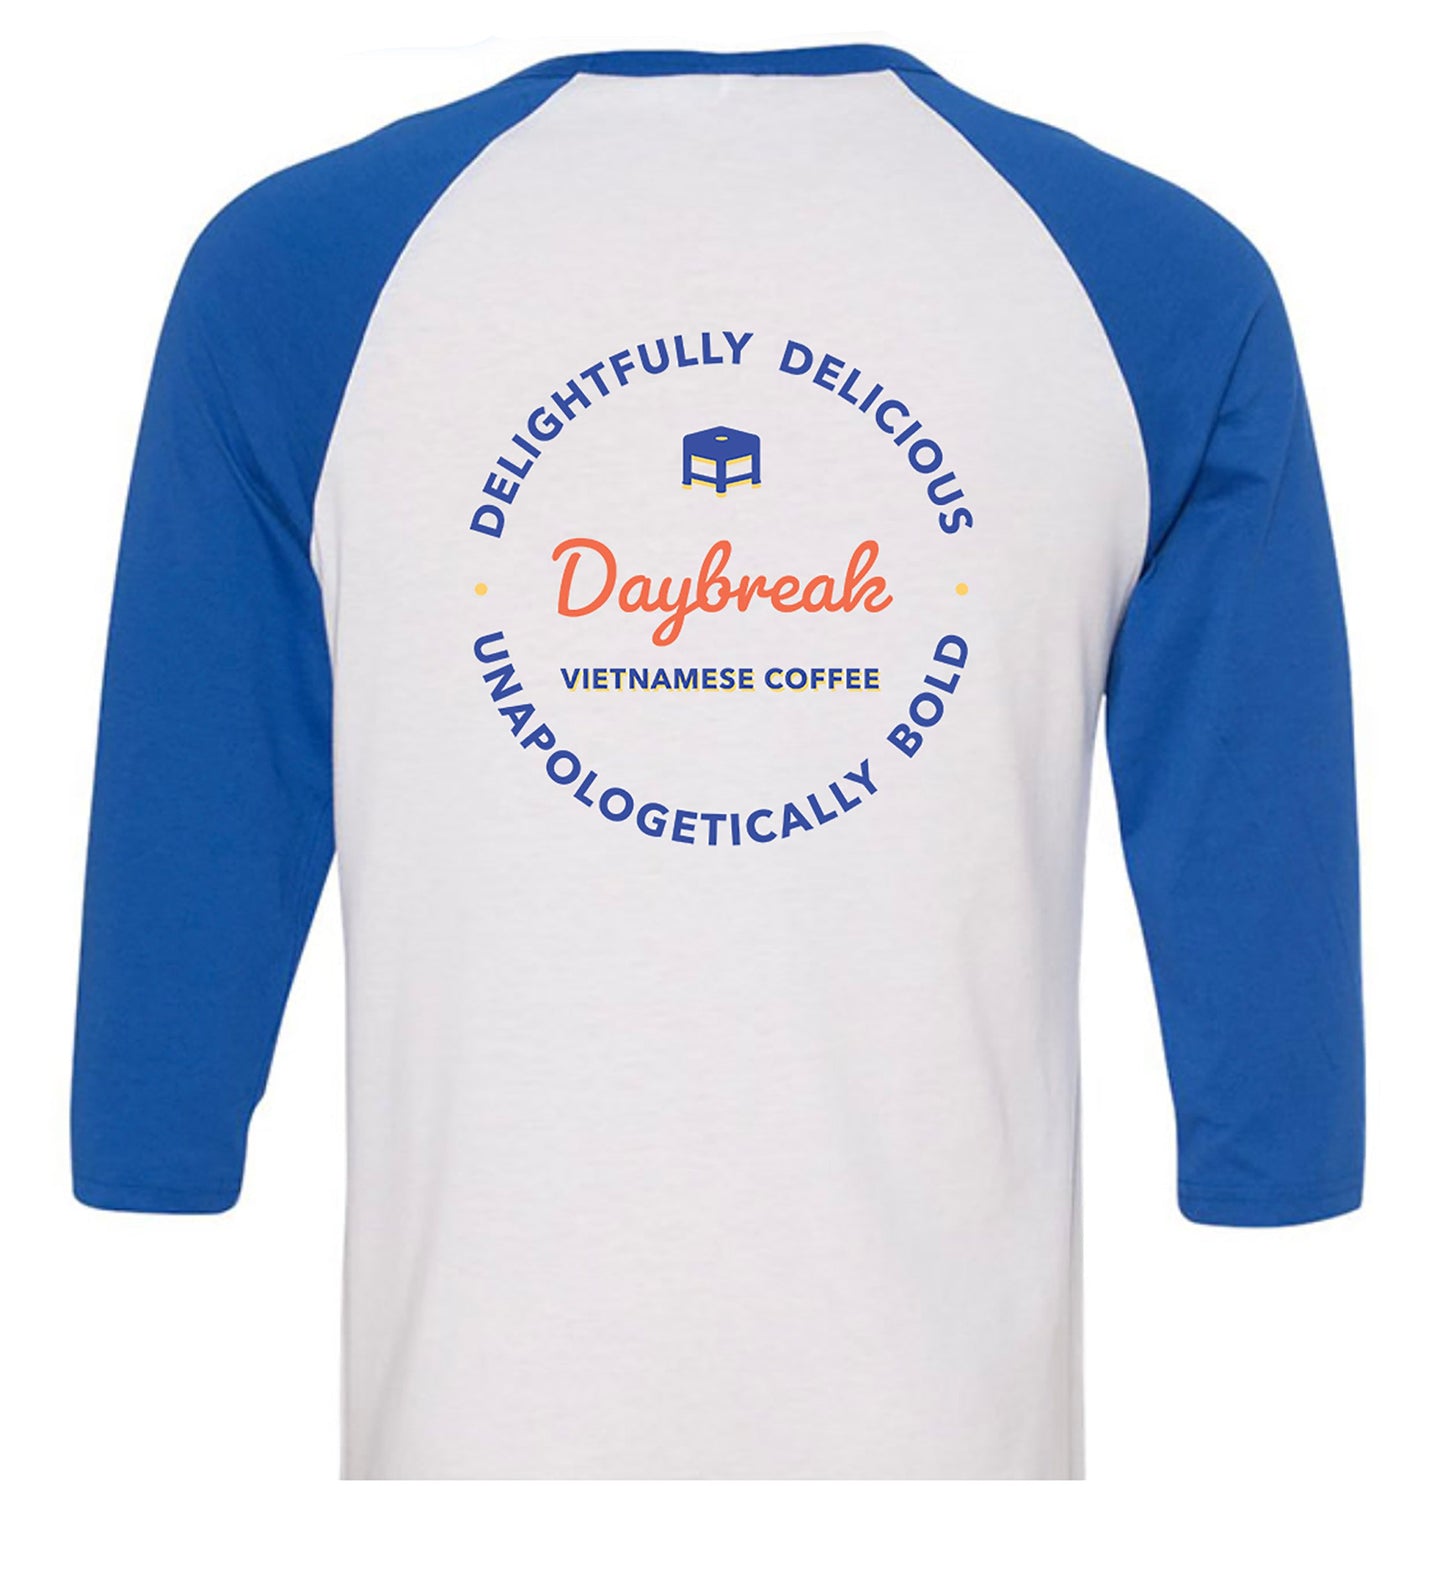 Daybreak Original Raglan Shirt (Local Delivery)